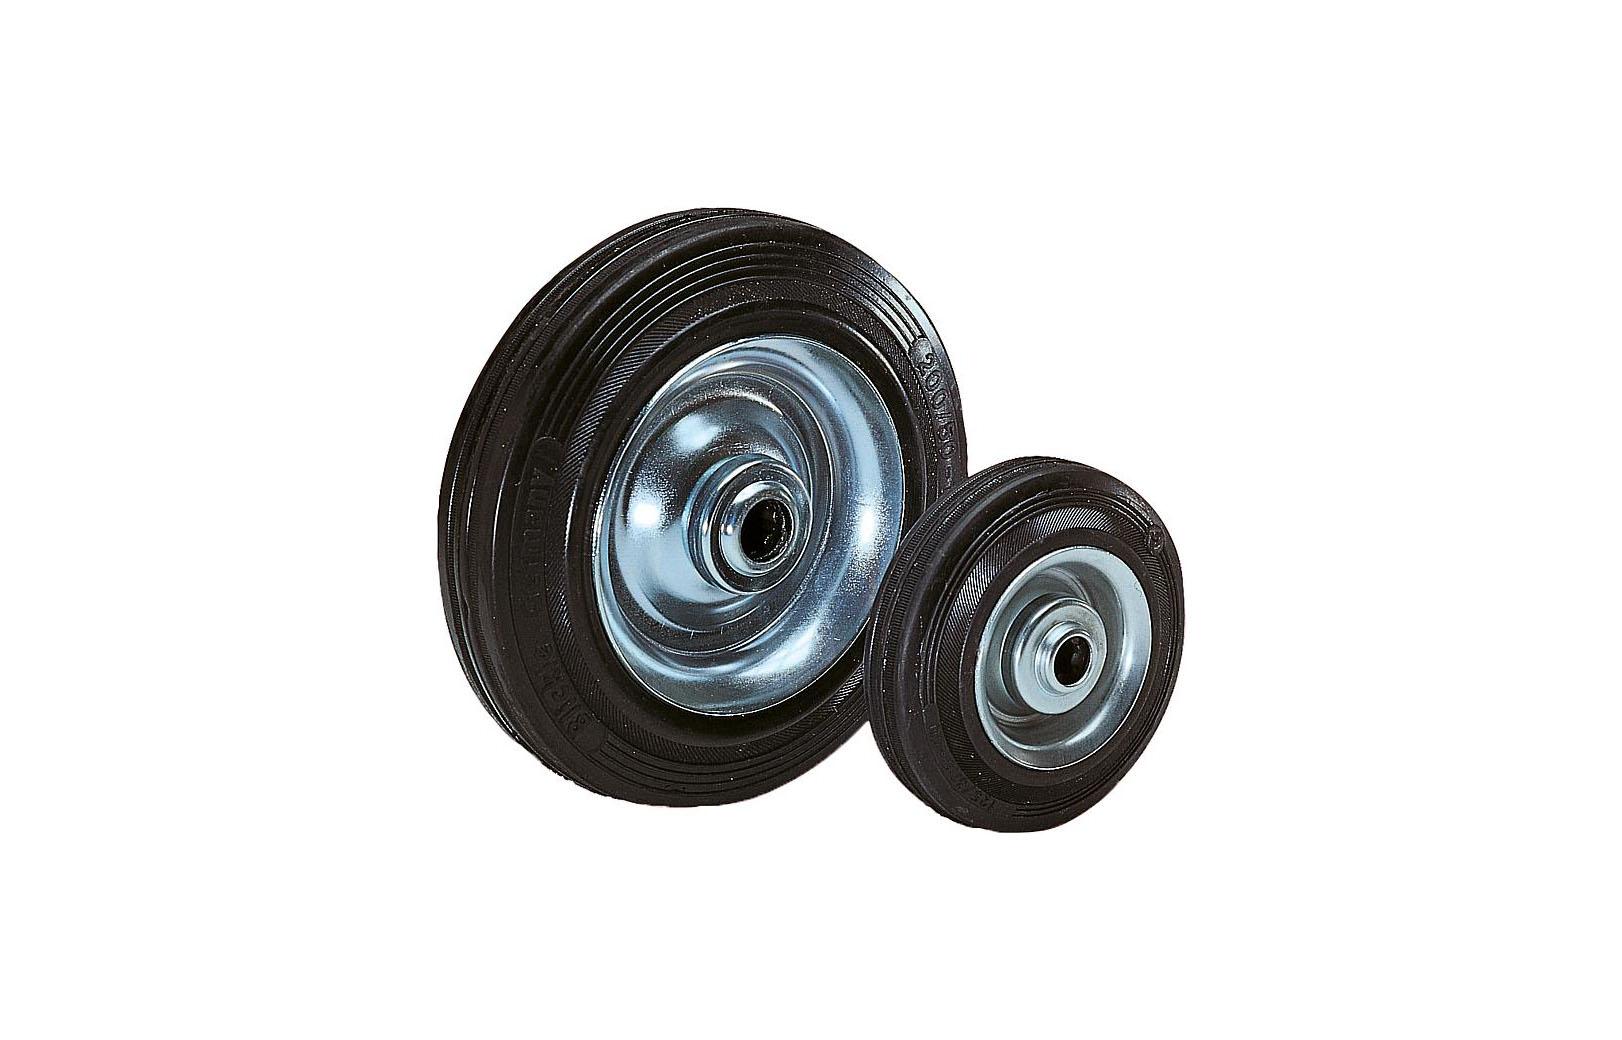 K1776_Wheels rubber tyres on steel plate rims